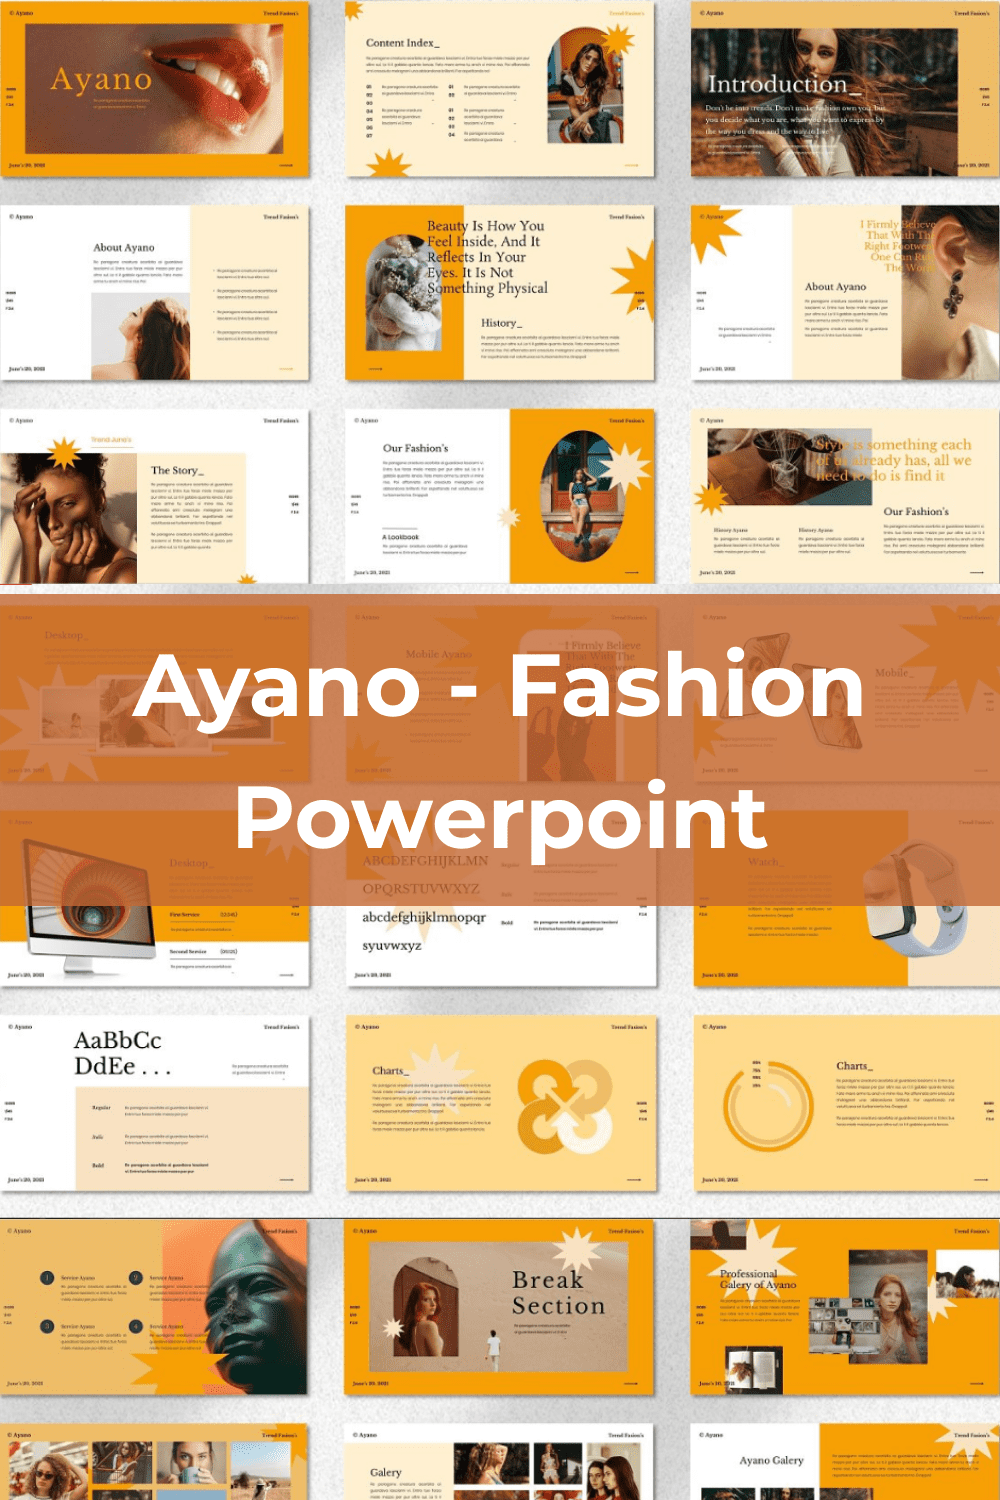 Ayano - Fashion Powerpoint Pinterest.